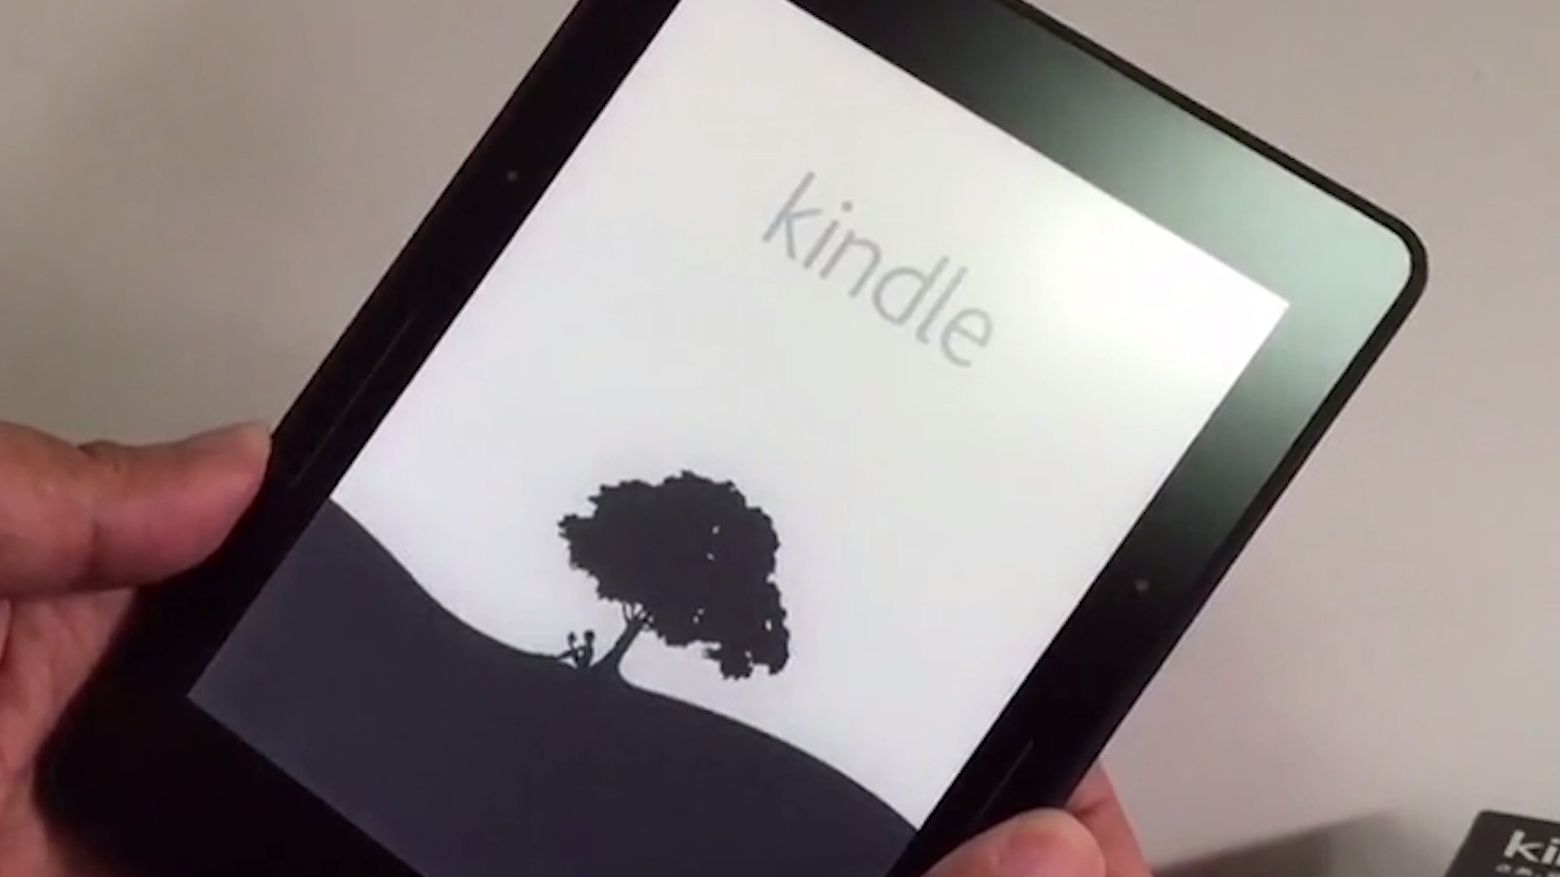 Kindle被传将退出中国市场？亚马逊出面回应：部分机型“售罄”